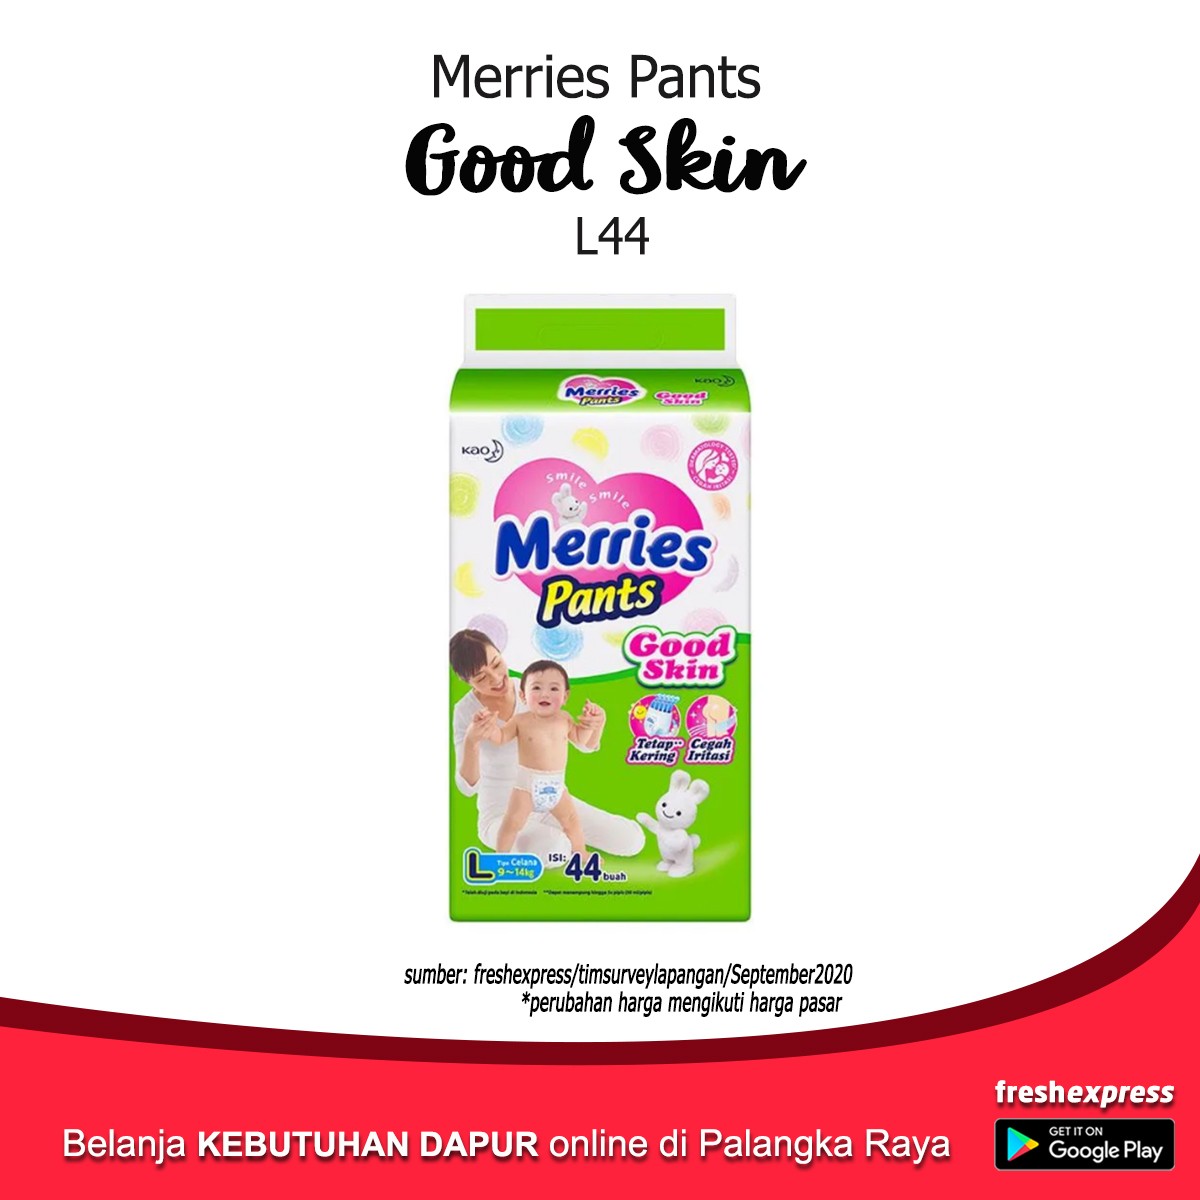 Merries Pants Good Skin L44